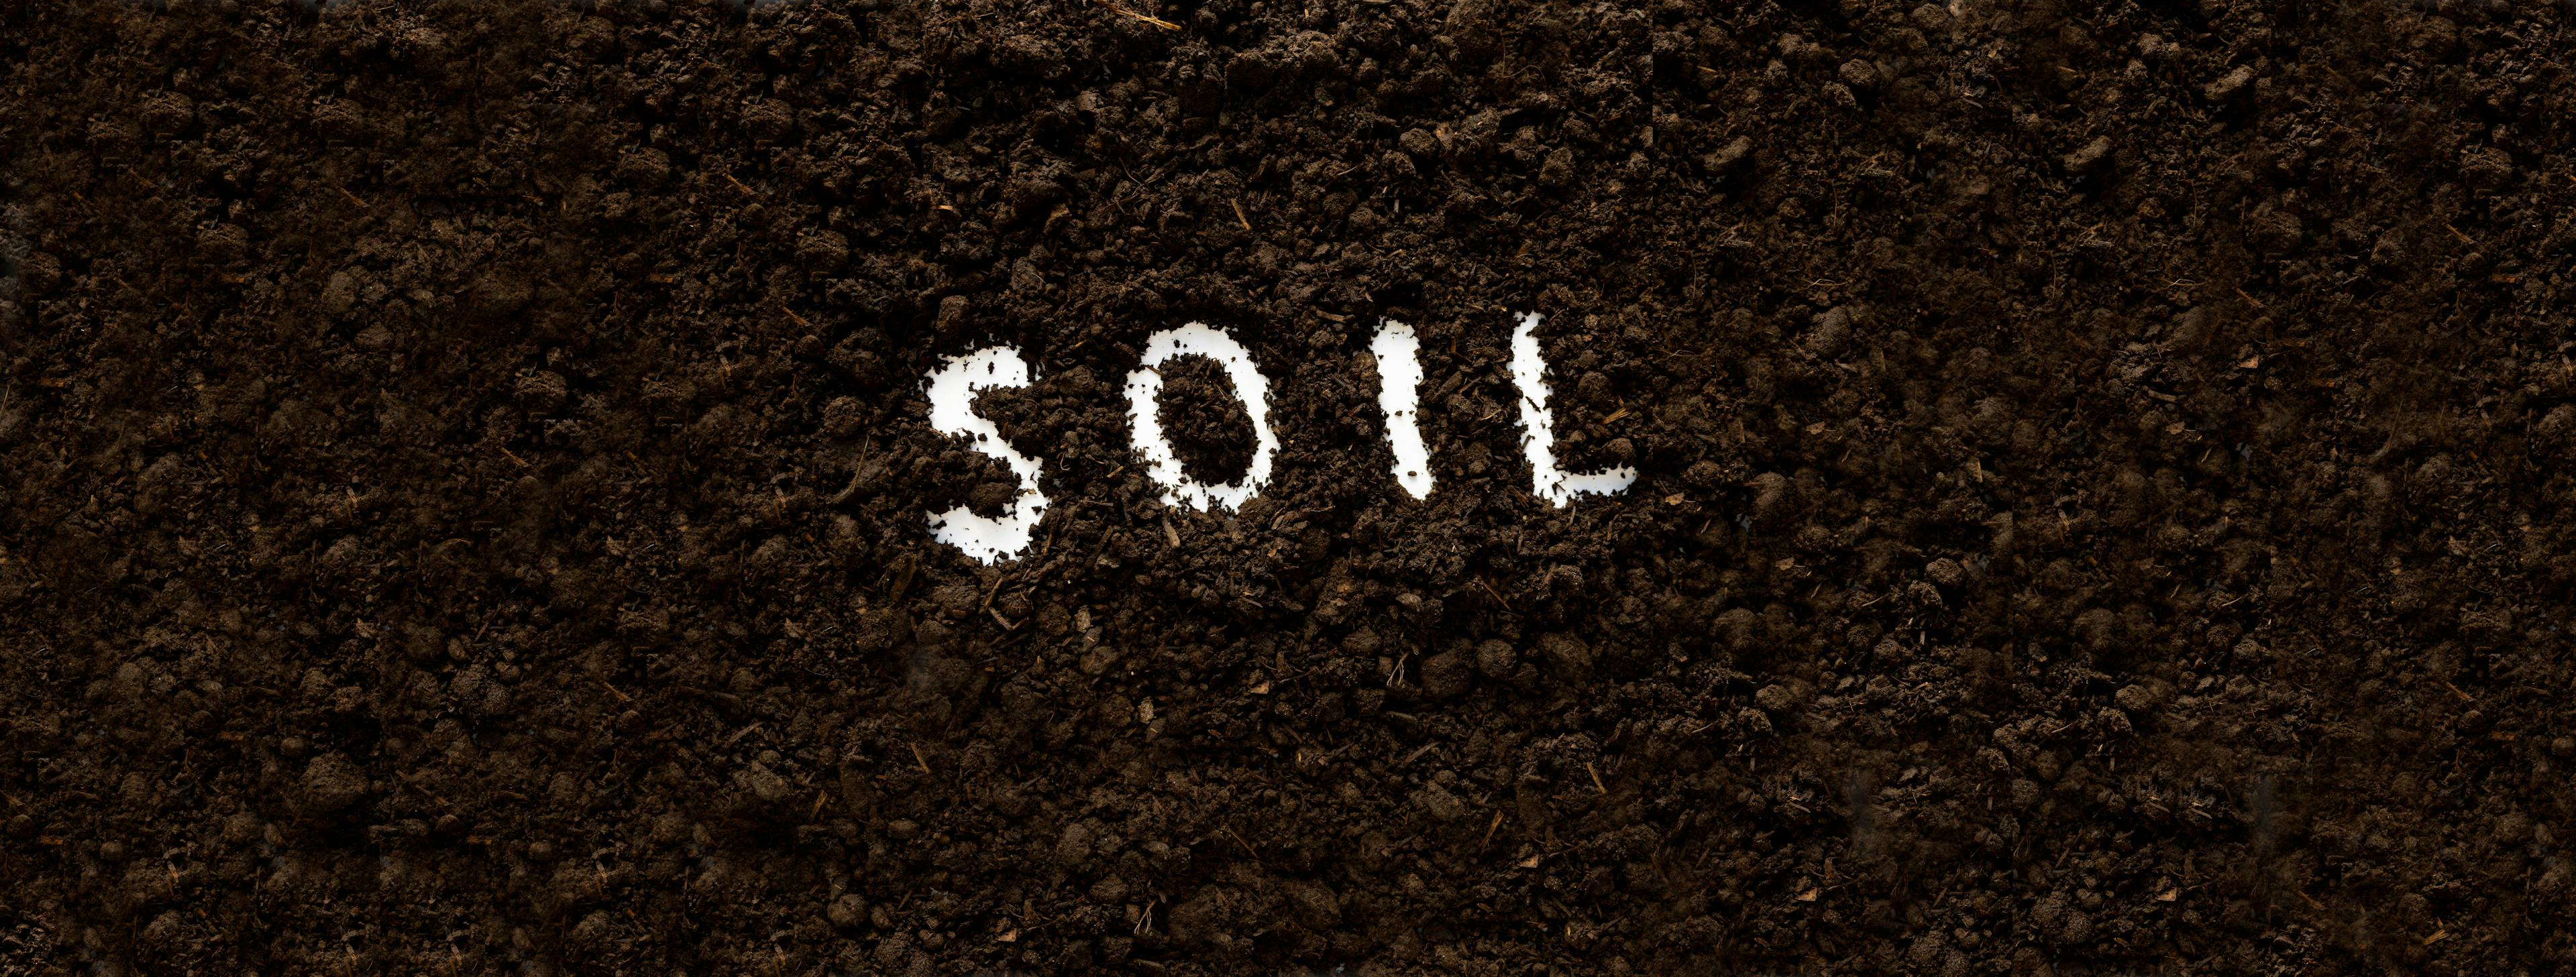 A close-up of dark soil.